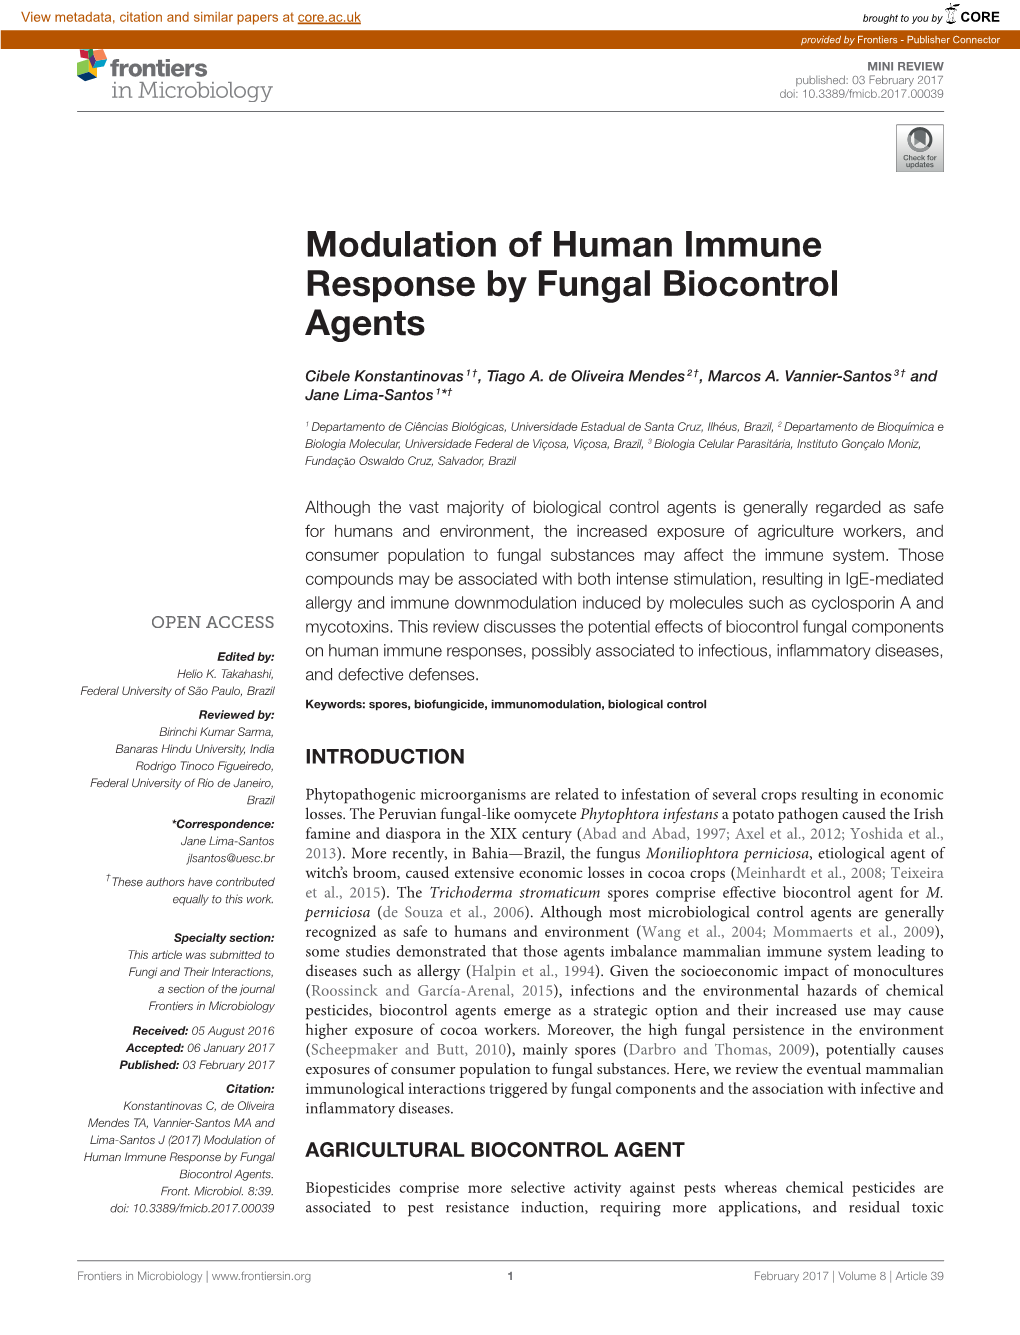 Modulation of Human Immune Response by Fungal Biocontrol Agents